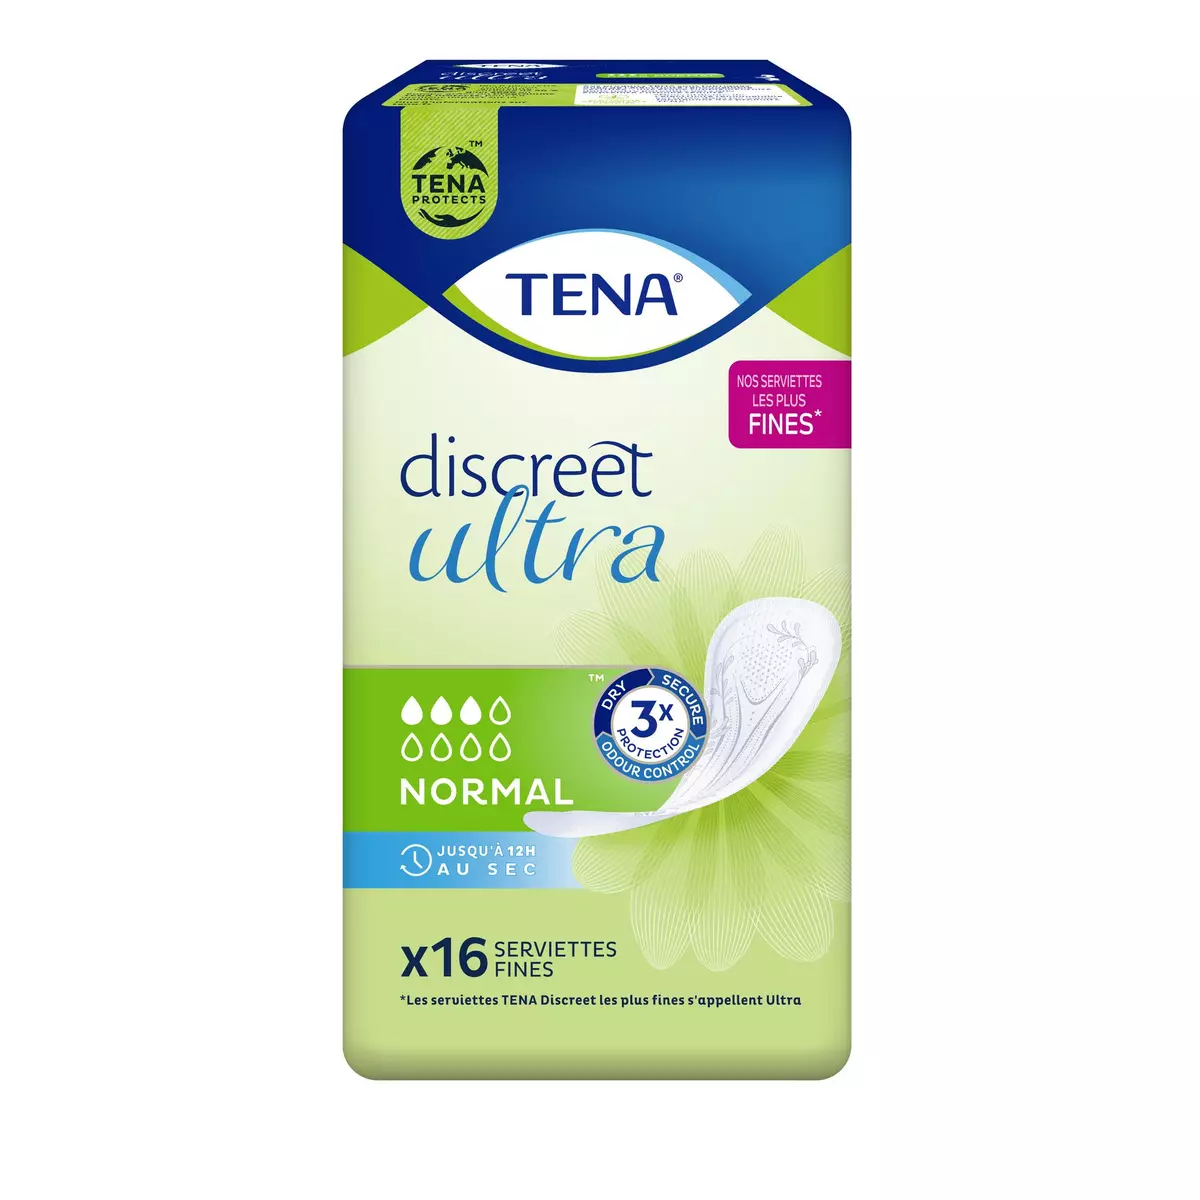 TENA Discreet ultra serviettes hygiéniques normal 16 serviettes